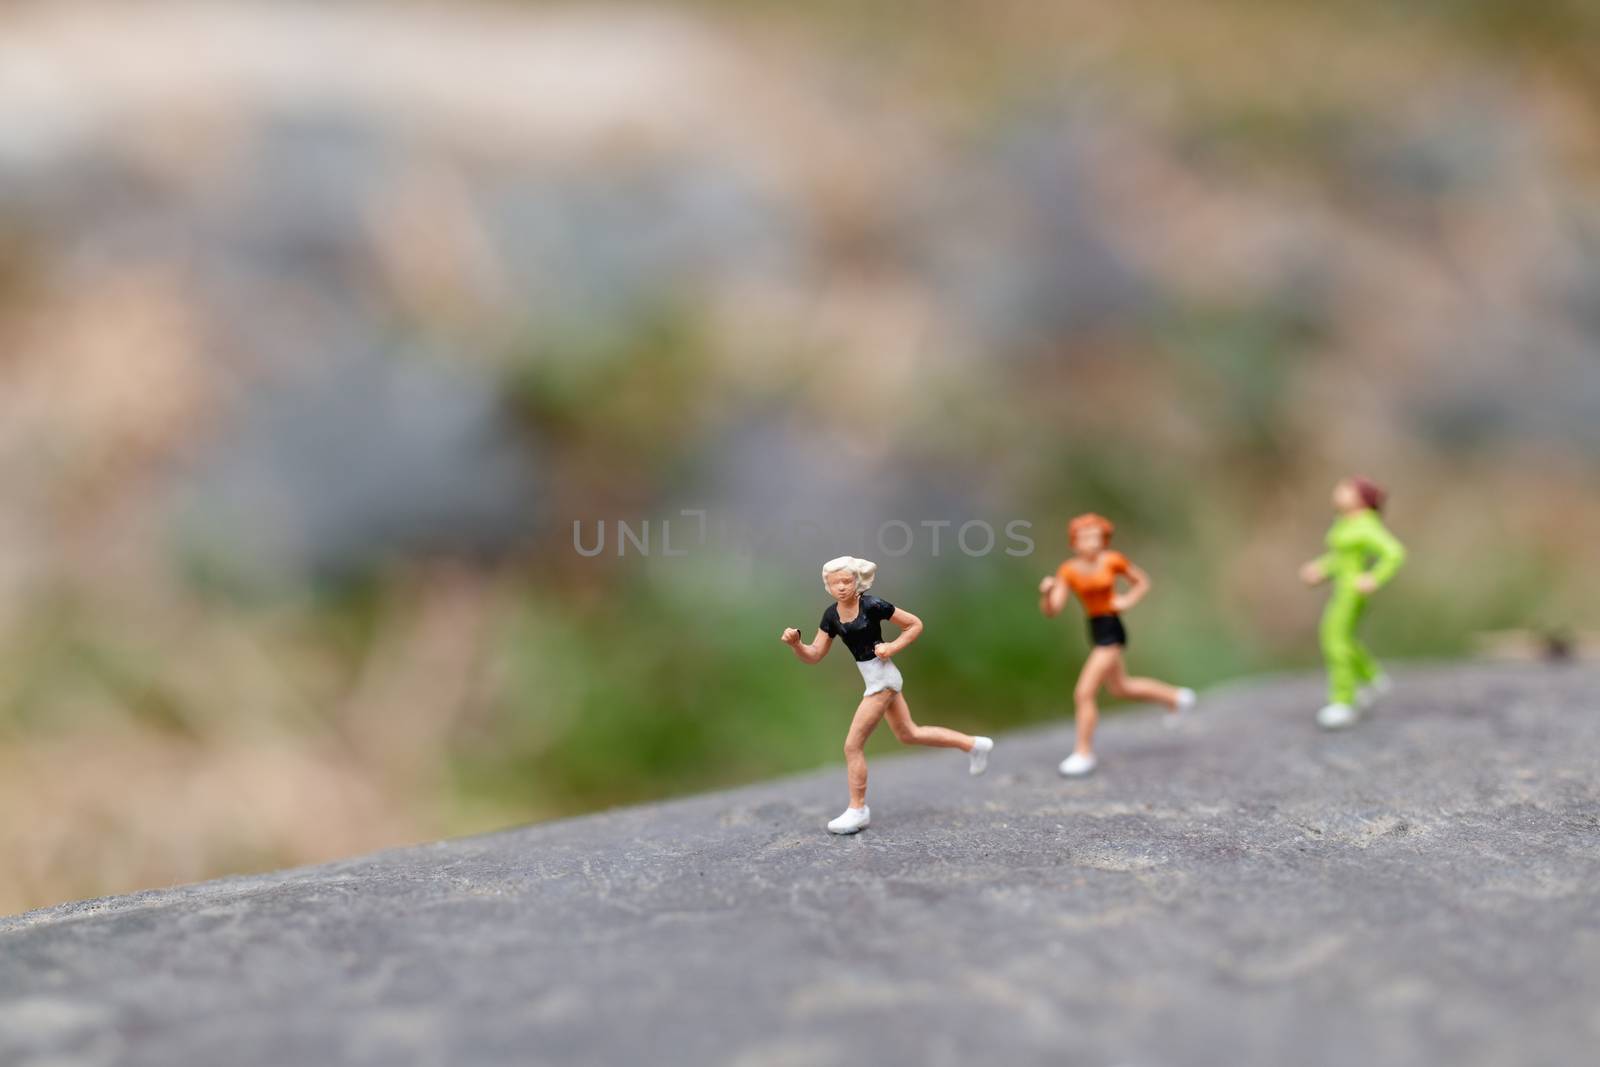 Miniature people Running on The Rock by sirichaiyaymicro